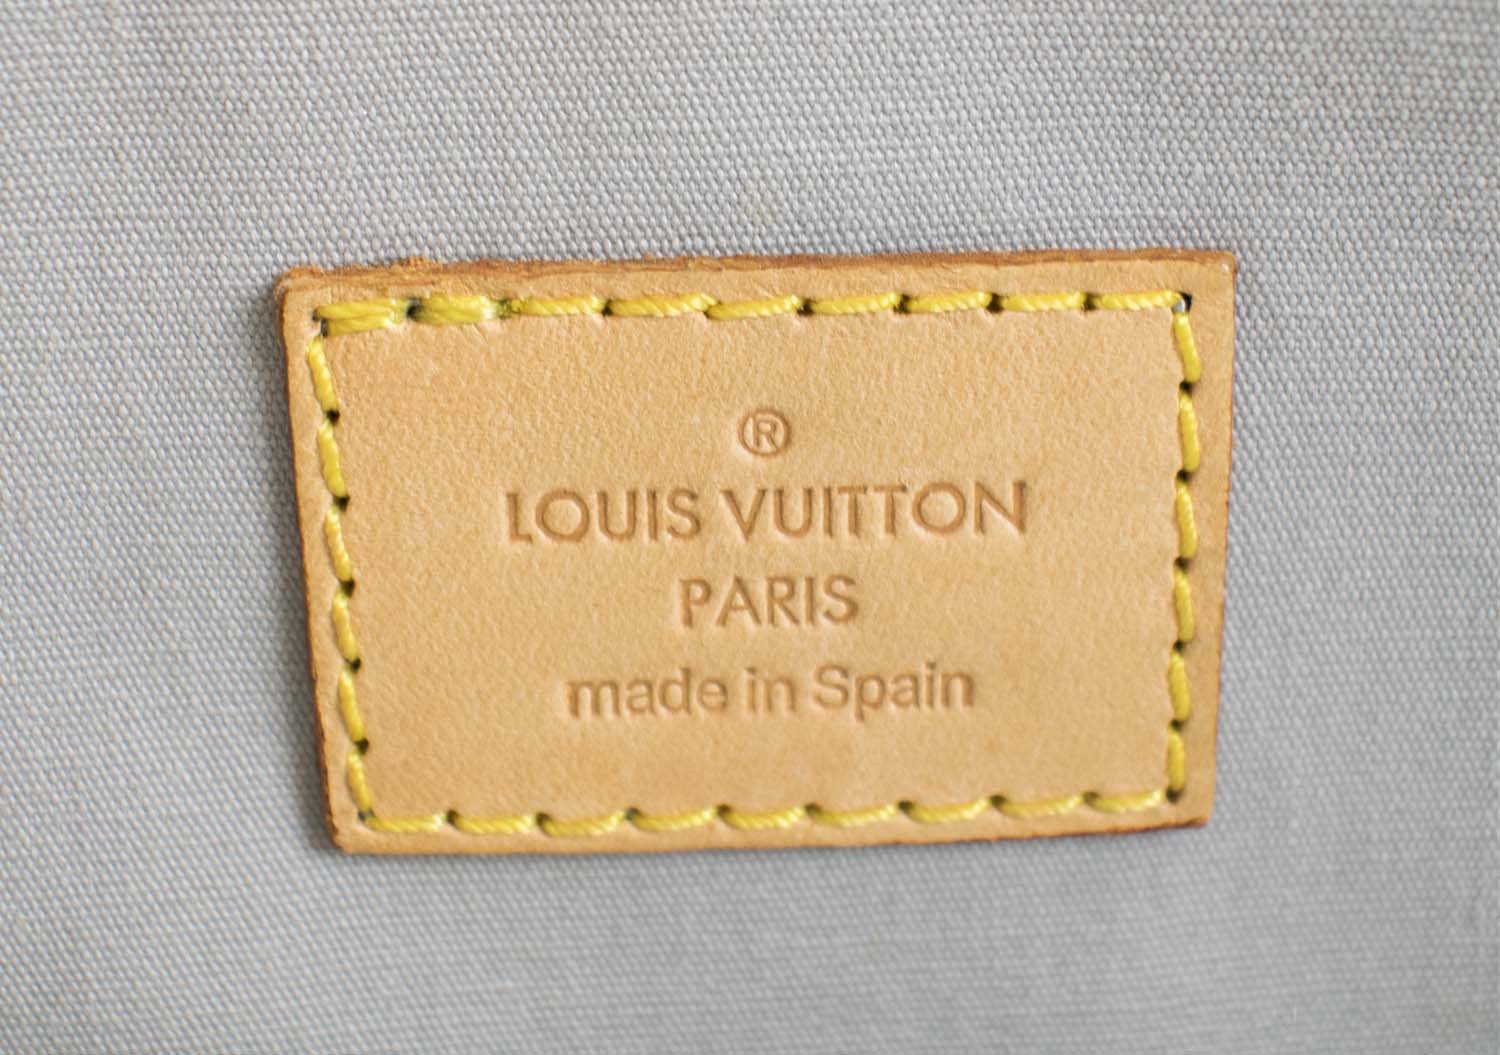 LOUIS VUITTON MONOGRAM VERNIS ROXBURY DRIVE BAG, cream patent leather with  leather trims and detachable shoulder strap, gold tone hardware, snap  closure, light blue/grey fabric lining, 32cm x 17cm H x 11cm.